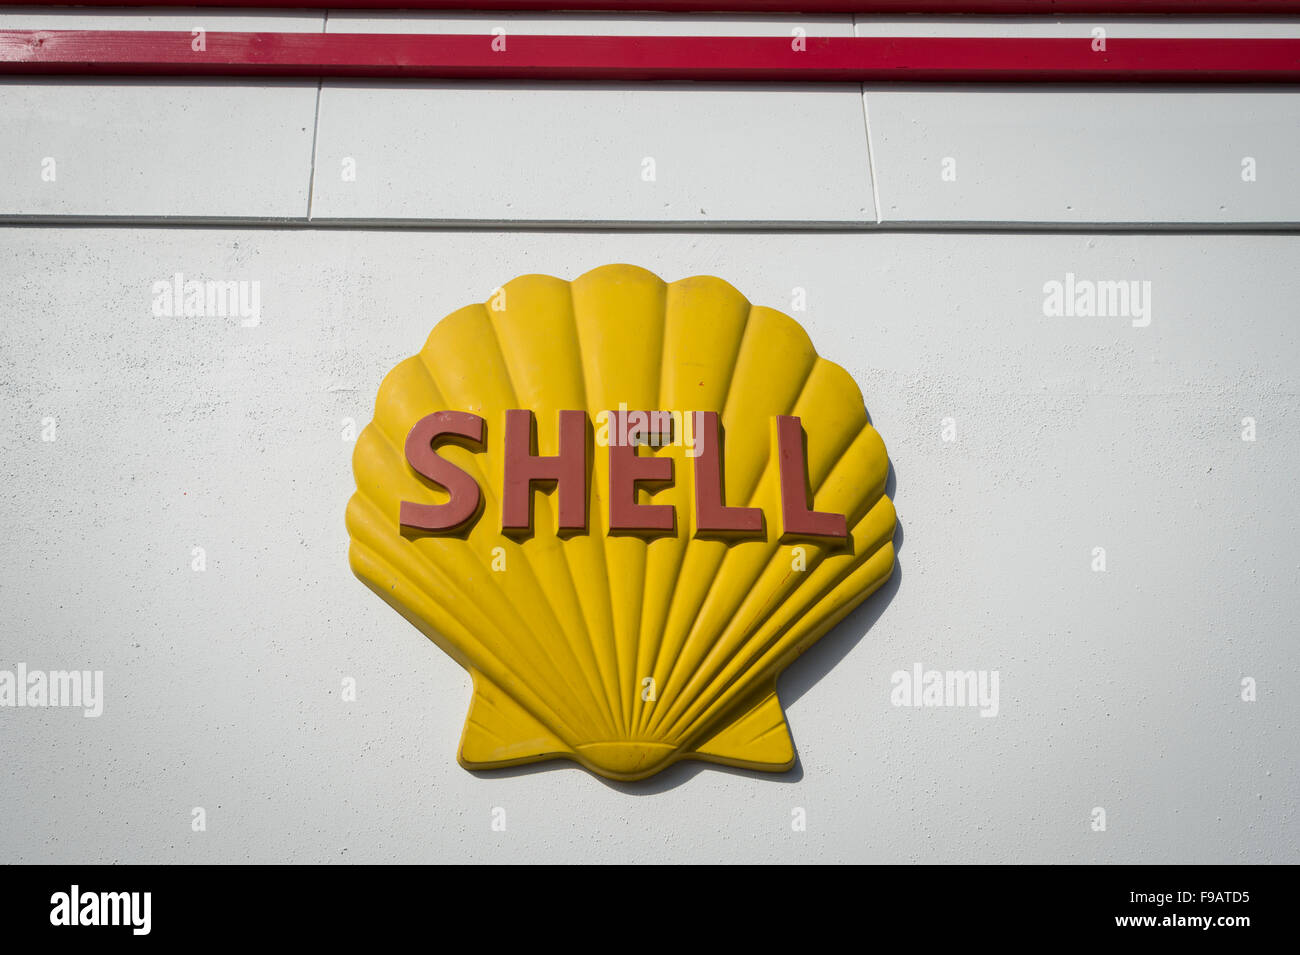 Shell oil and petroleum company logo Stock Photo